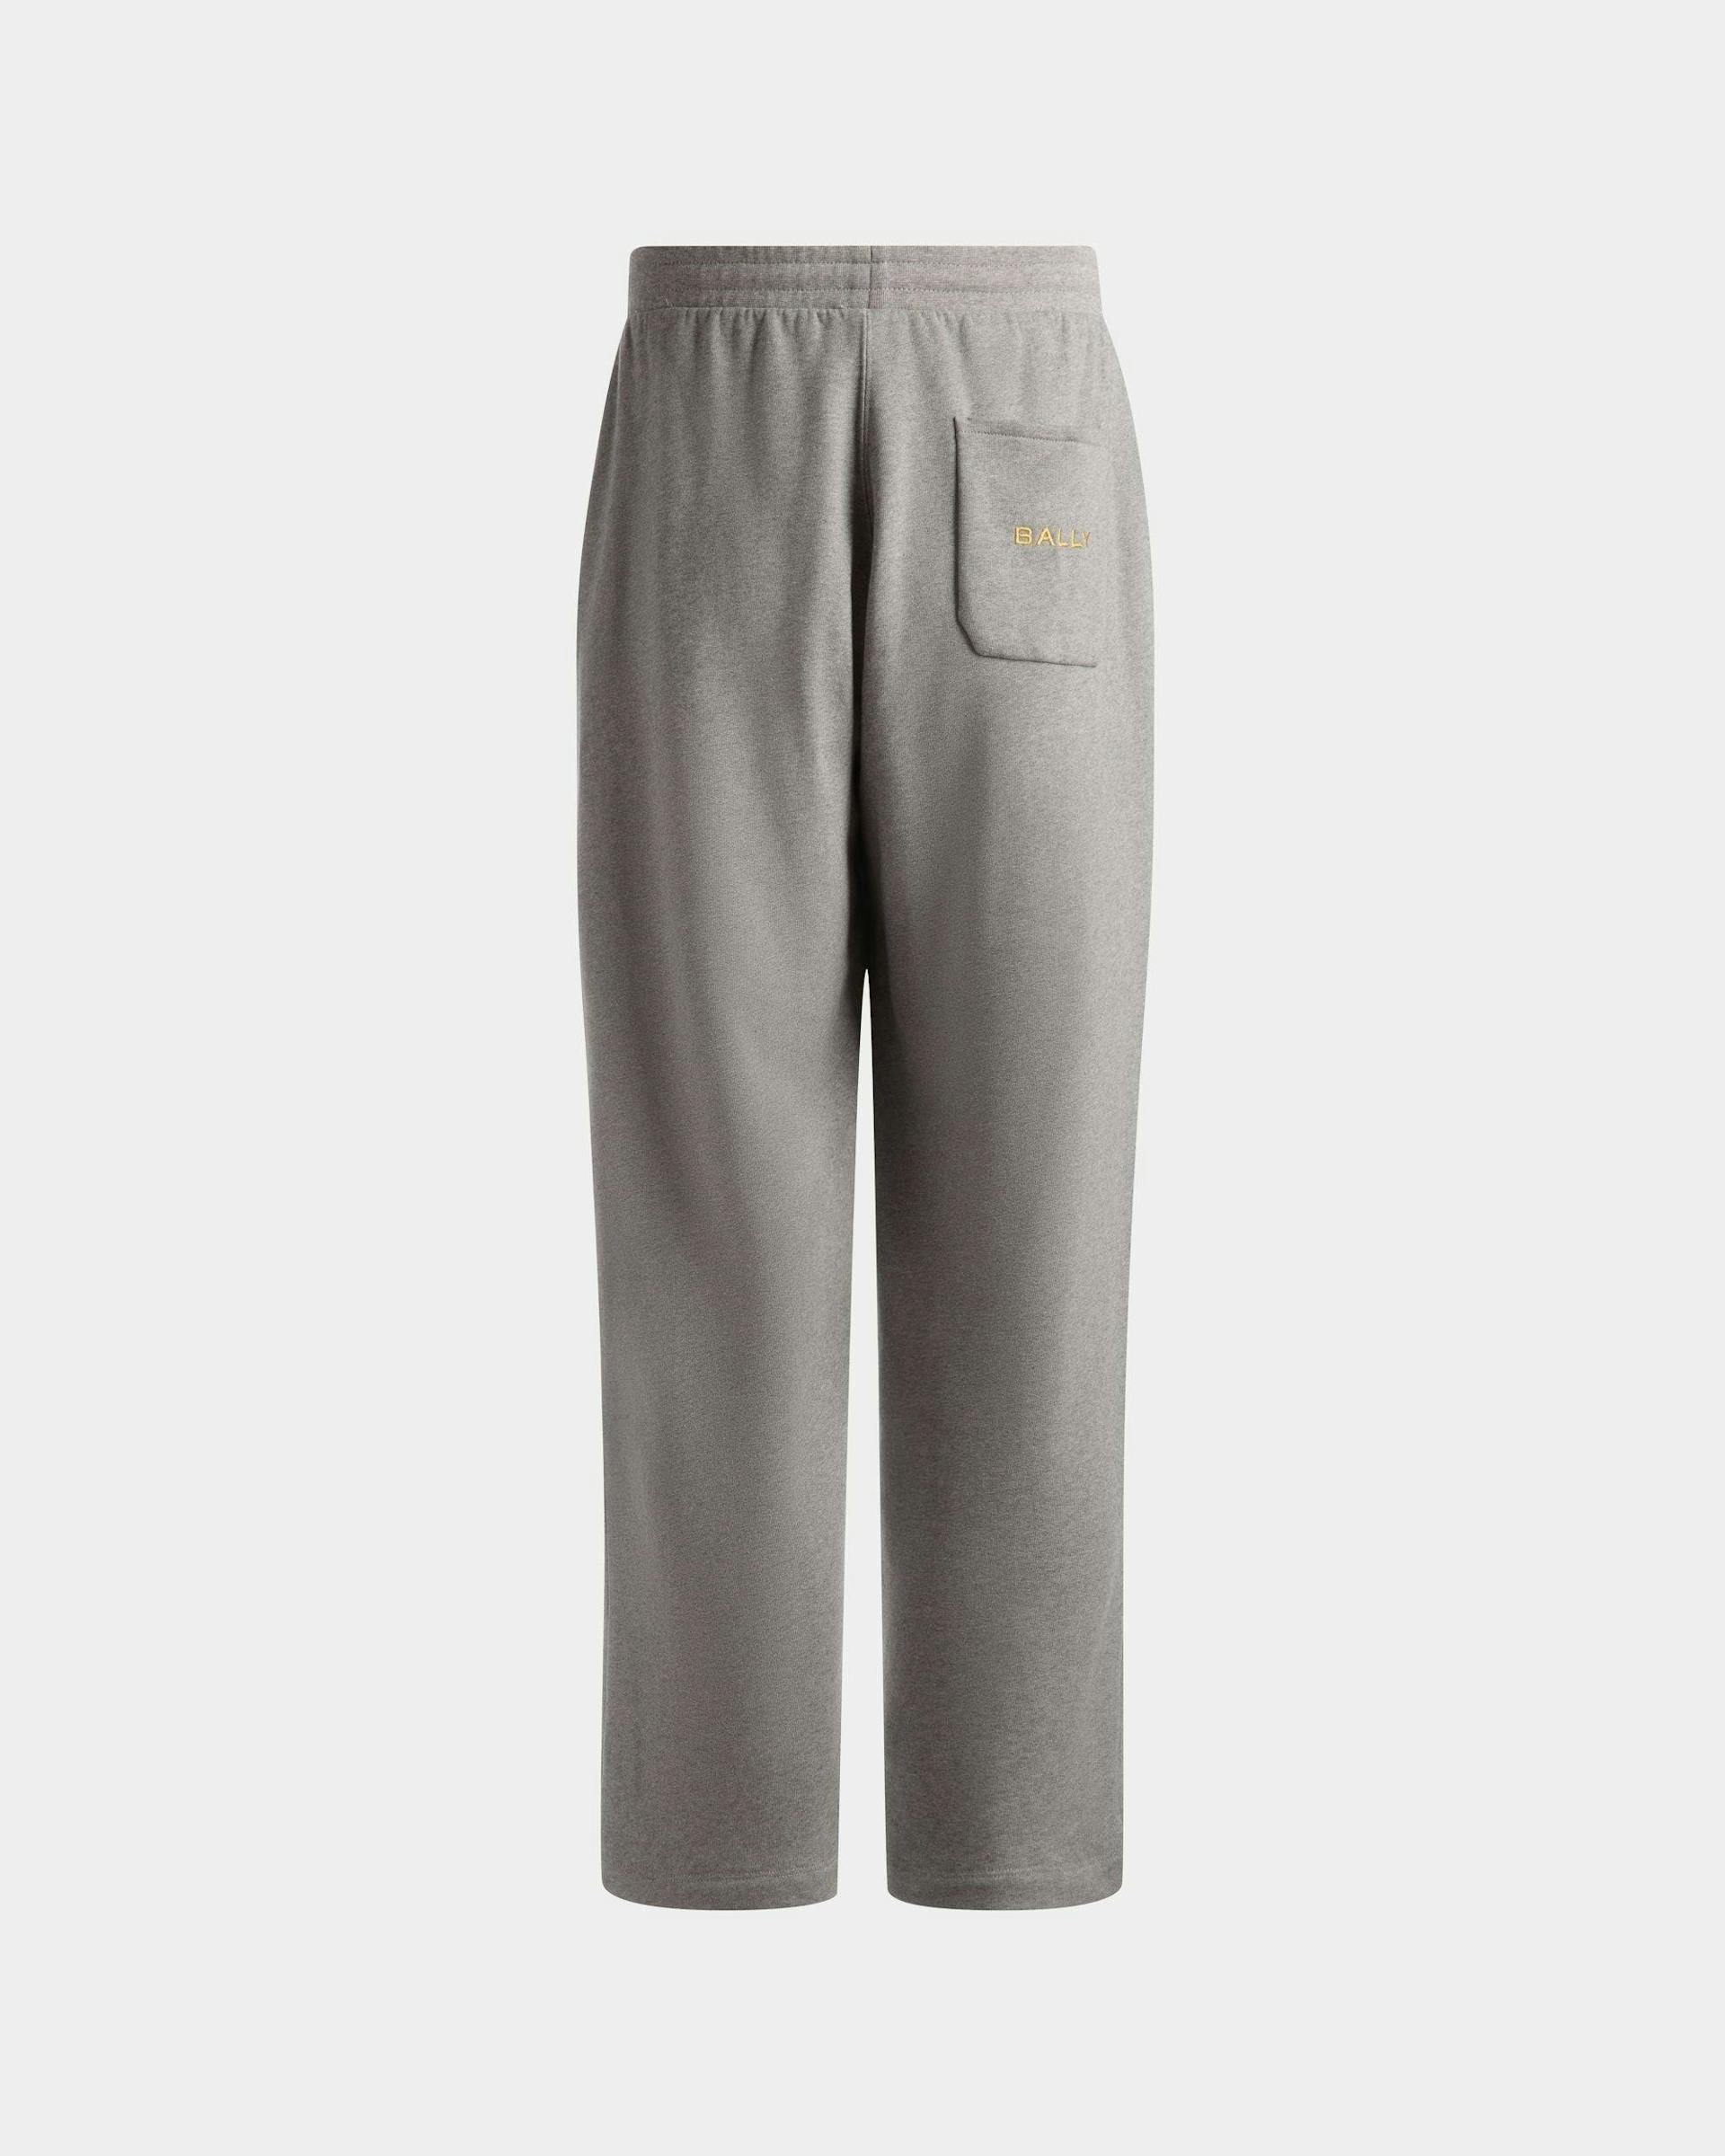 Men's Drawstring Sweatpants In Gray Melange Cotton | Bally | Still Life Back